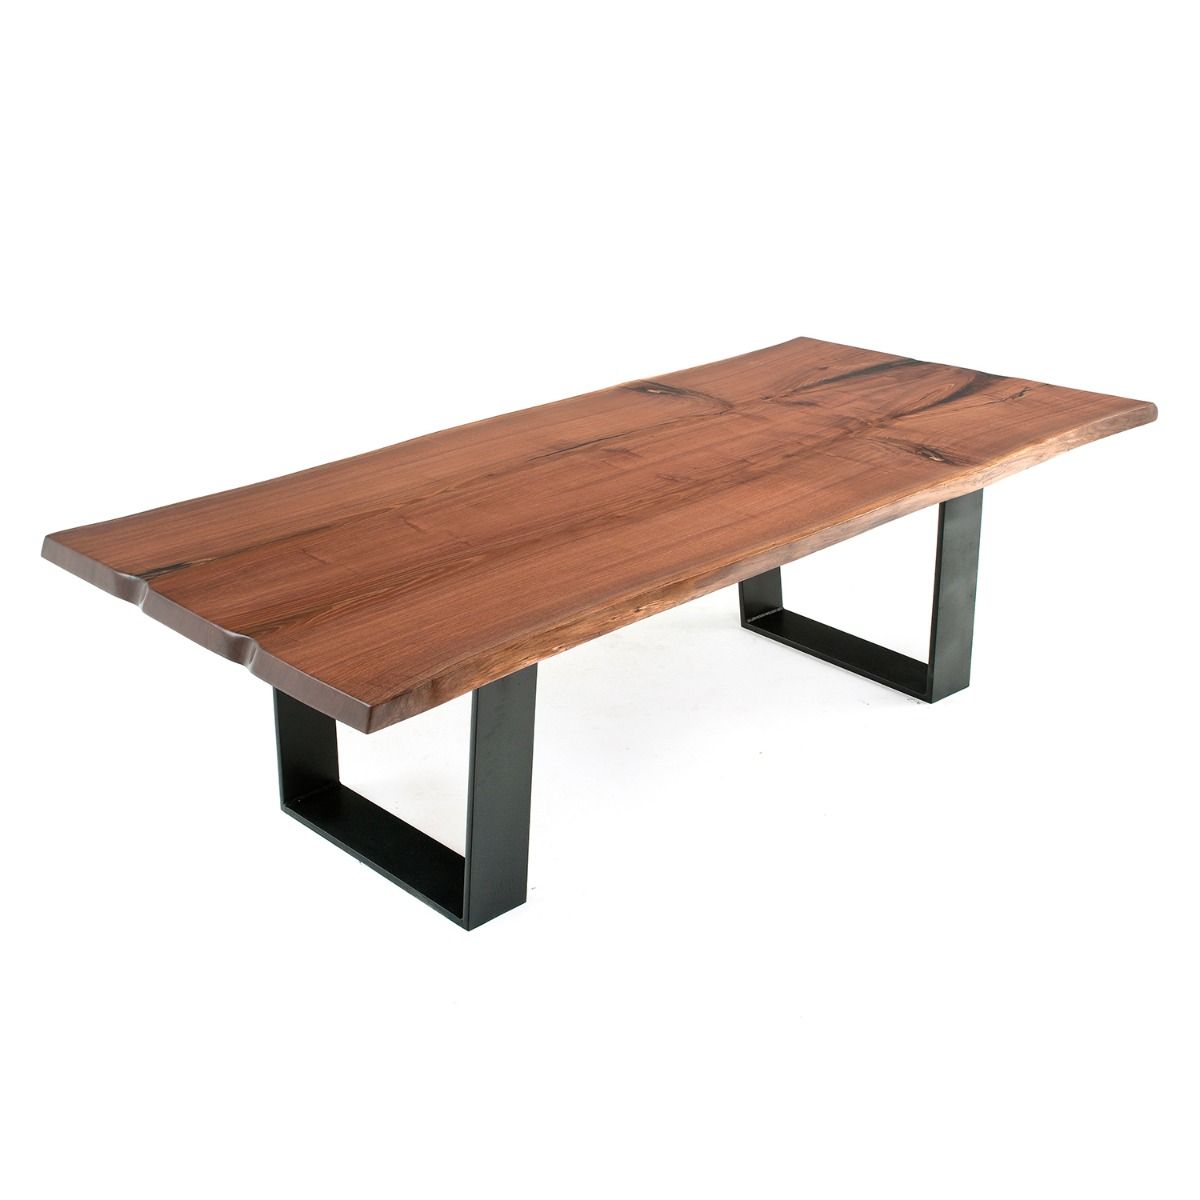 Sale Wood Table Live Edge Table Live Edge Wood Table Rustic Table Modern  Table Dining Table Maple Farmhouse Style Slab 